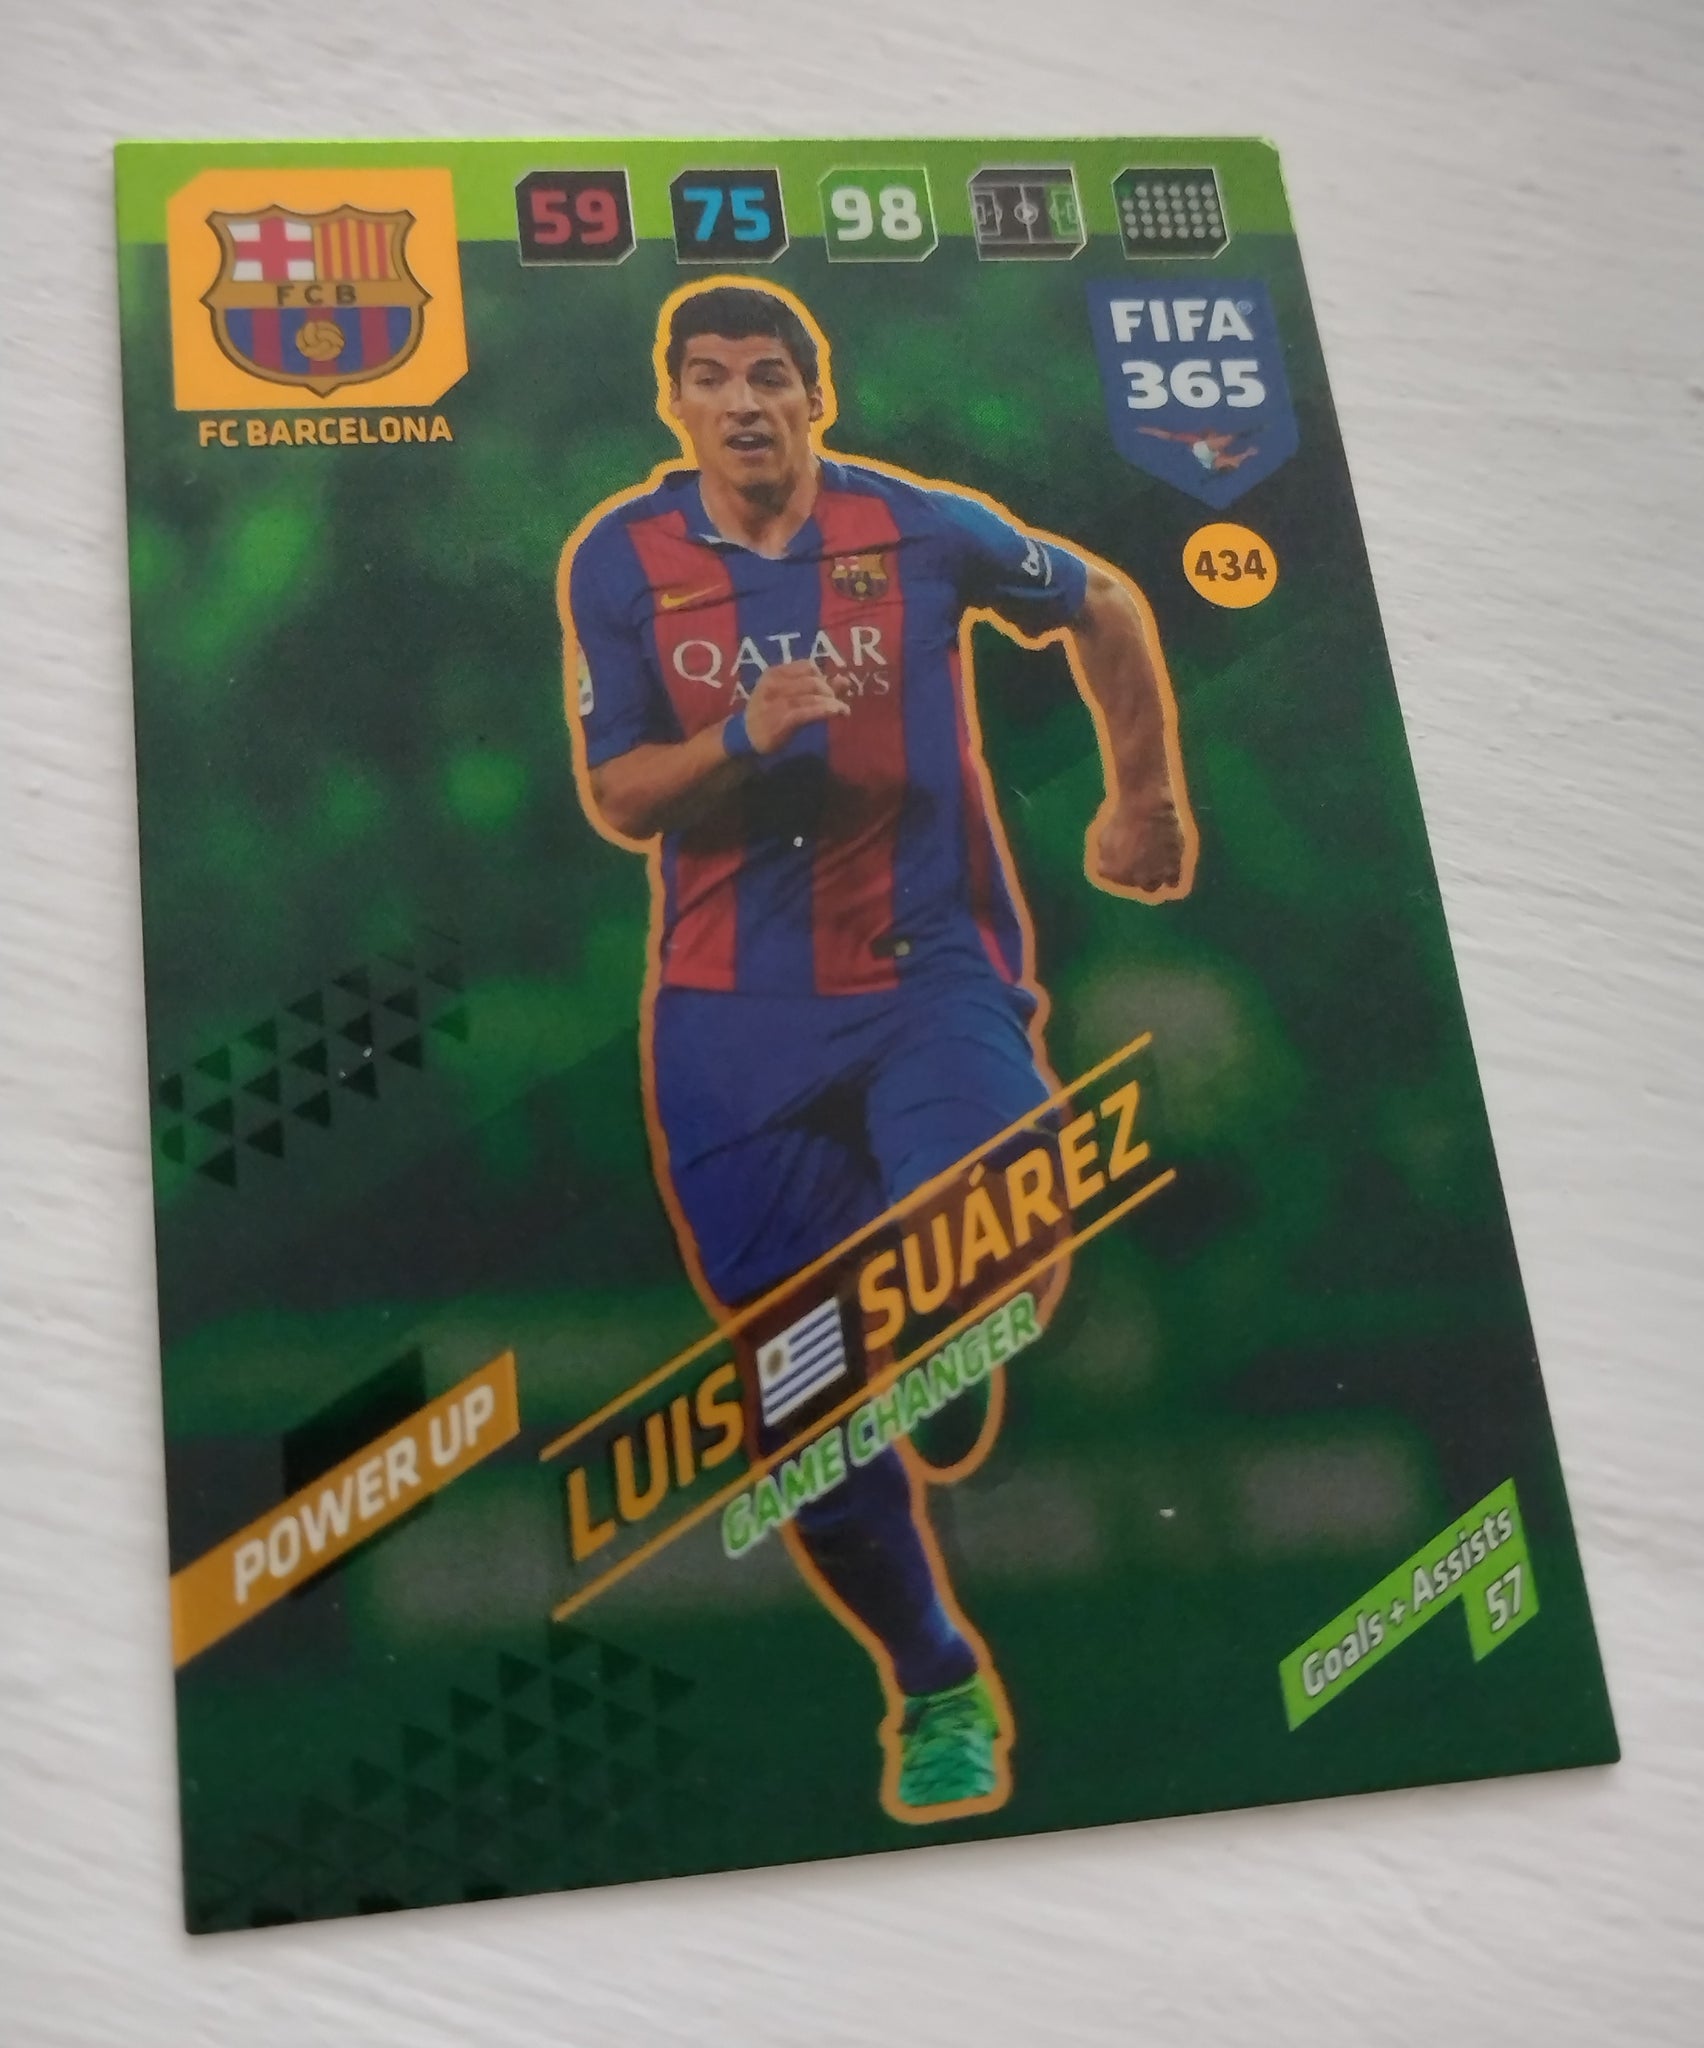 2017-2018 Panini Adrenalyn FIFA 365 Luis Suarez #434 Trading Card